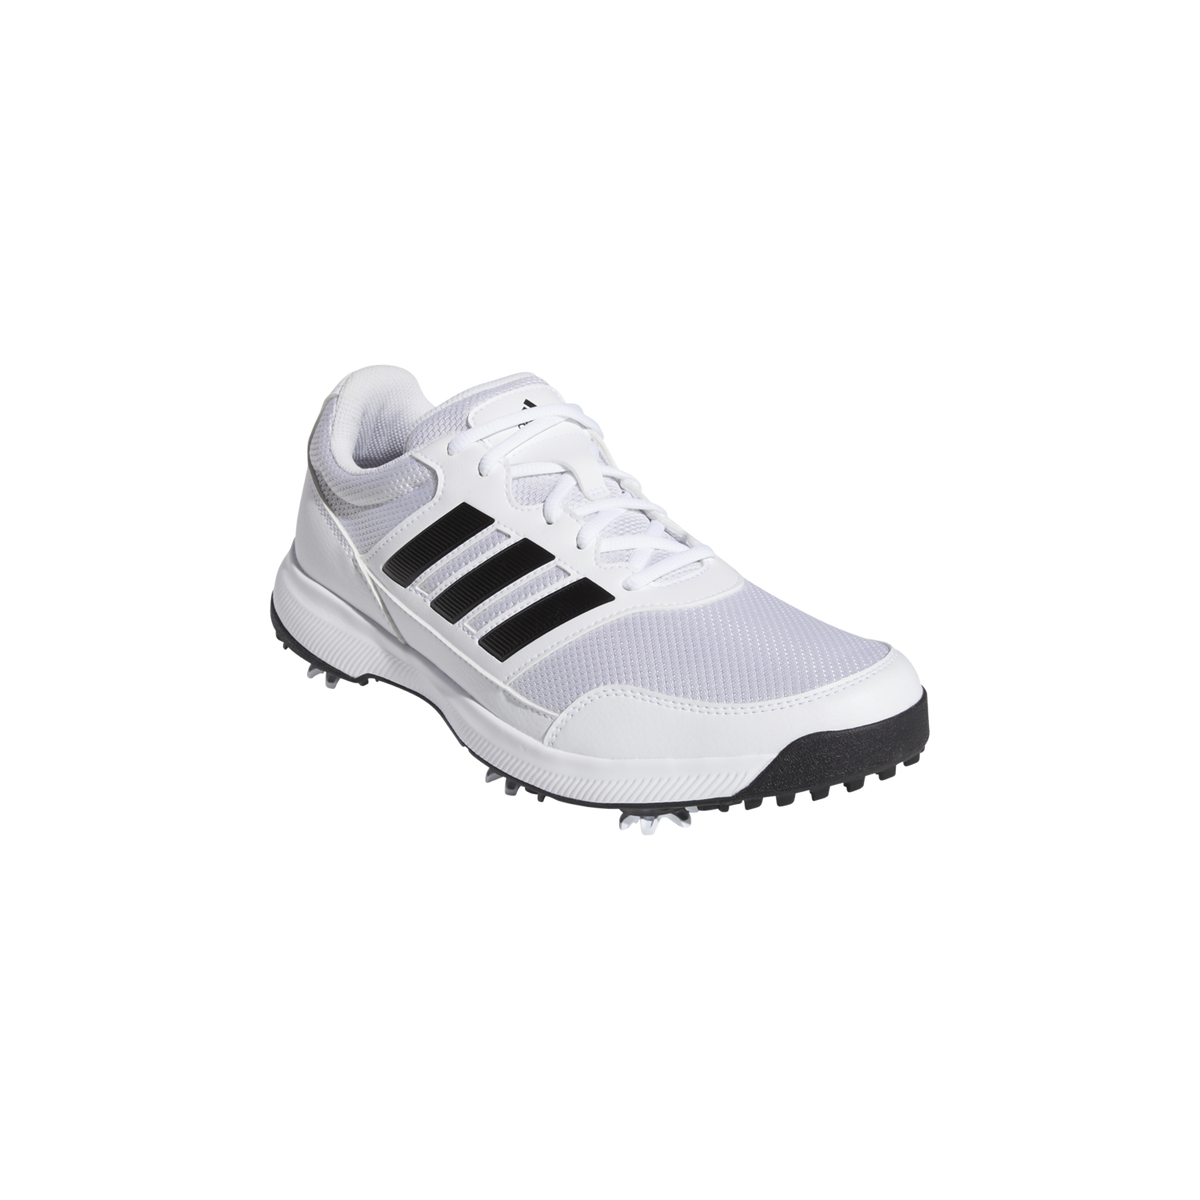 adidas Tech Response 2.0 Men's Golf Shoe - White/Black | PGA TOUR ...